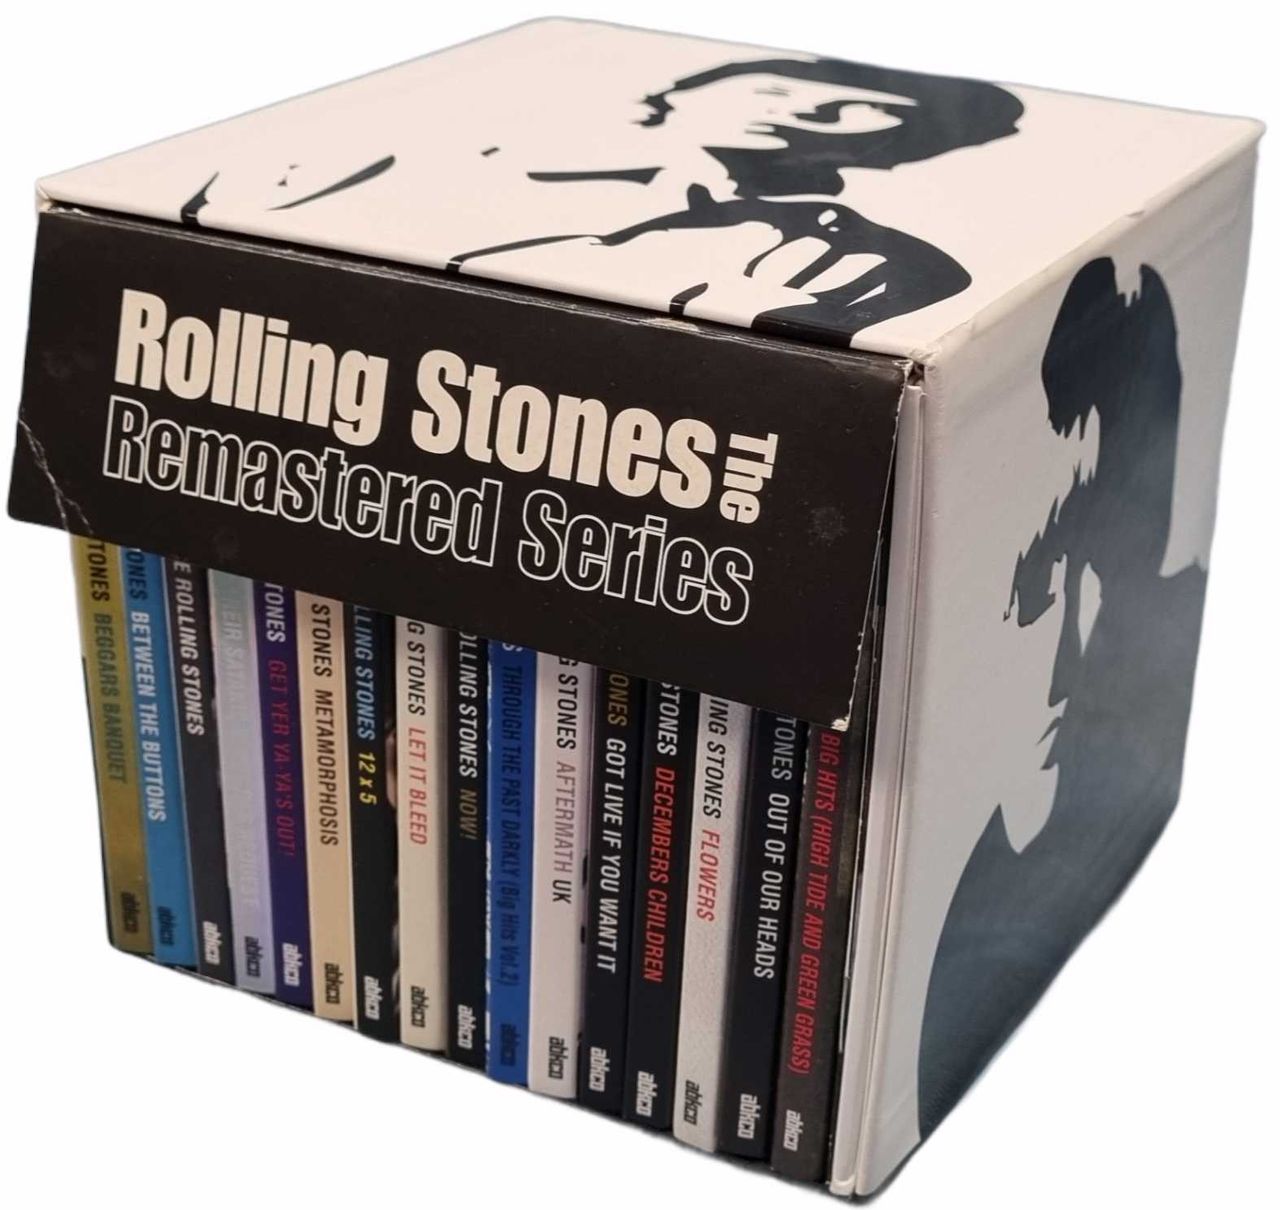 The Rolling Stones Remastered Series - Complete UK Cd album box set